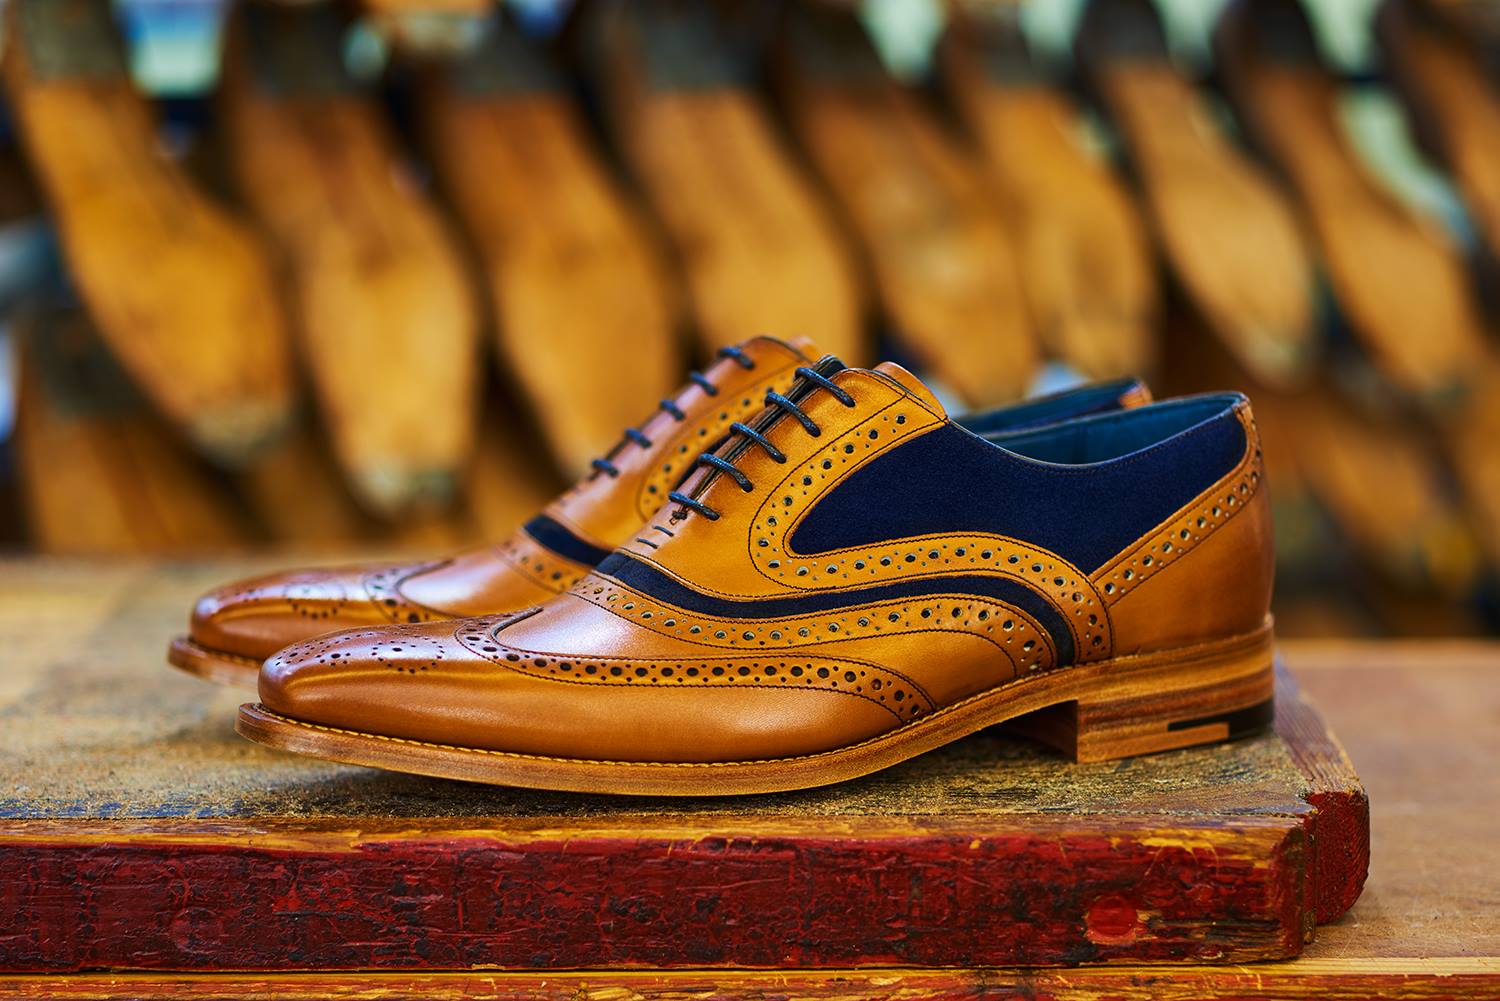 Mcclean-Men's Wingtip Oxford Shoes By Barker